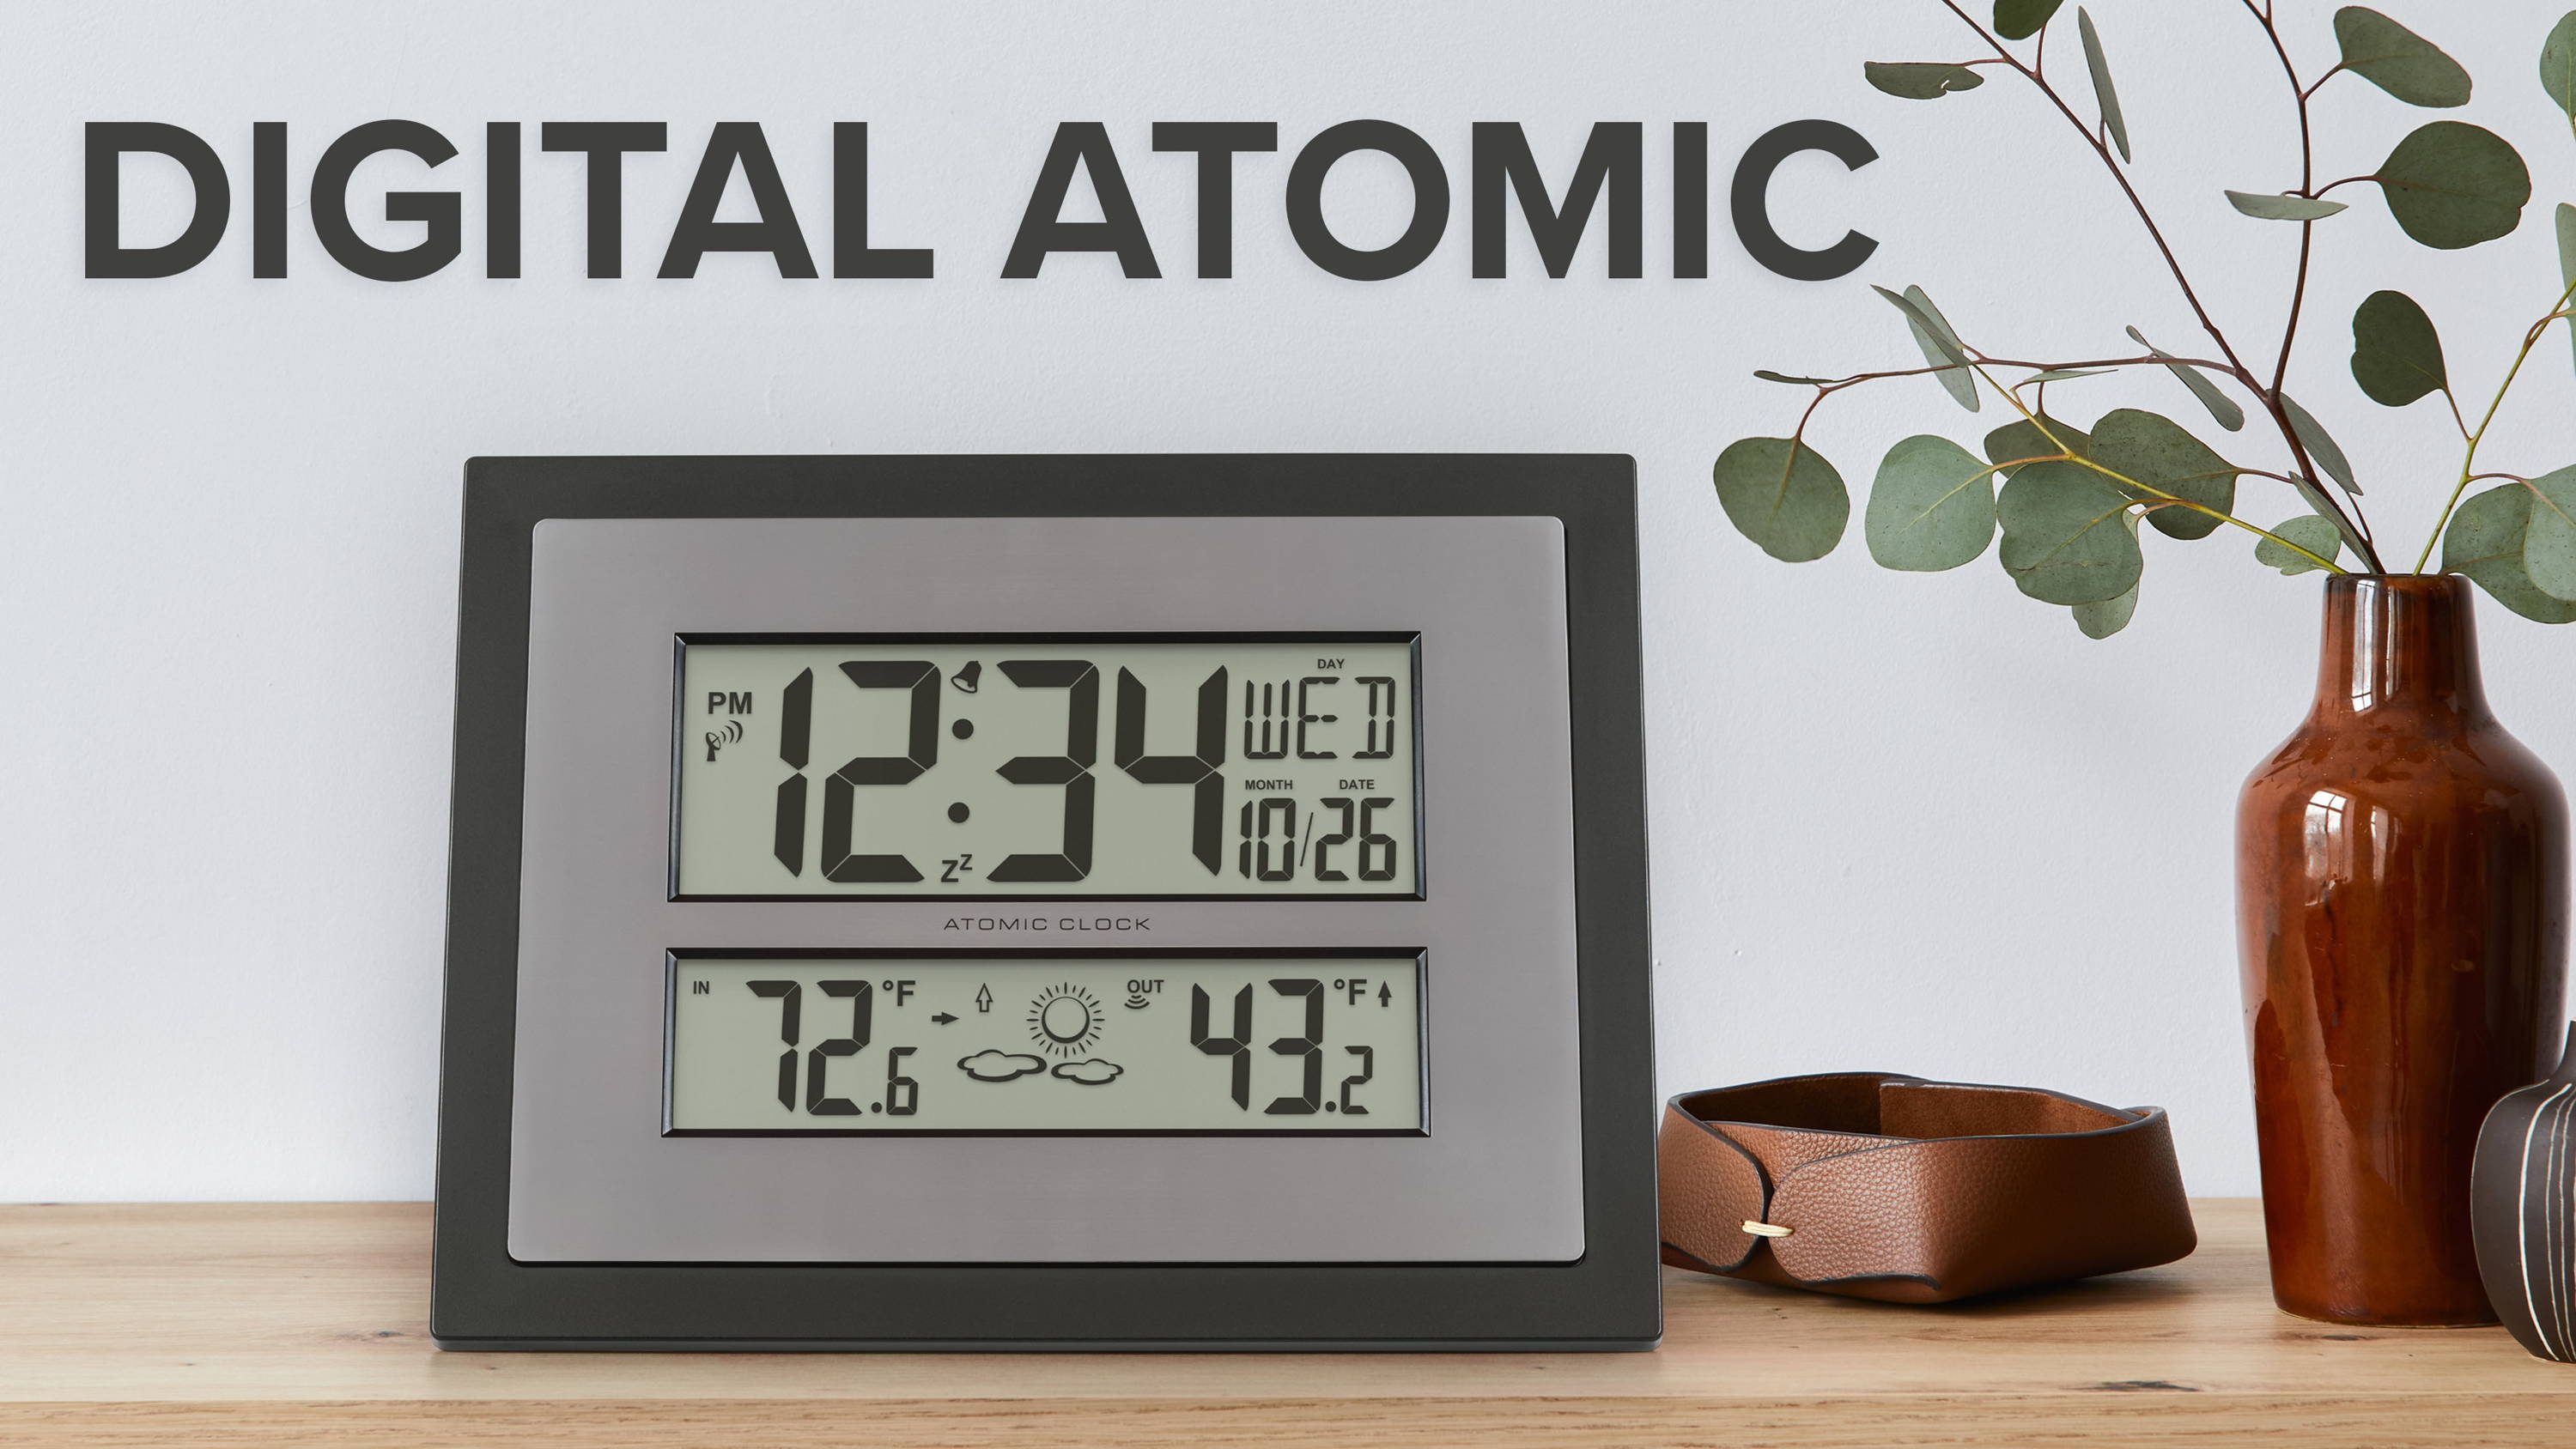 Analog Atomic clock lifestyle image